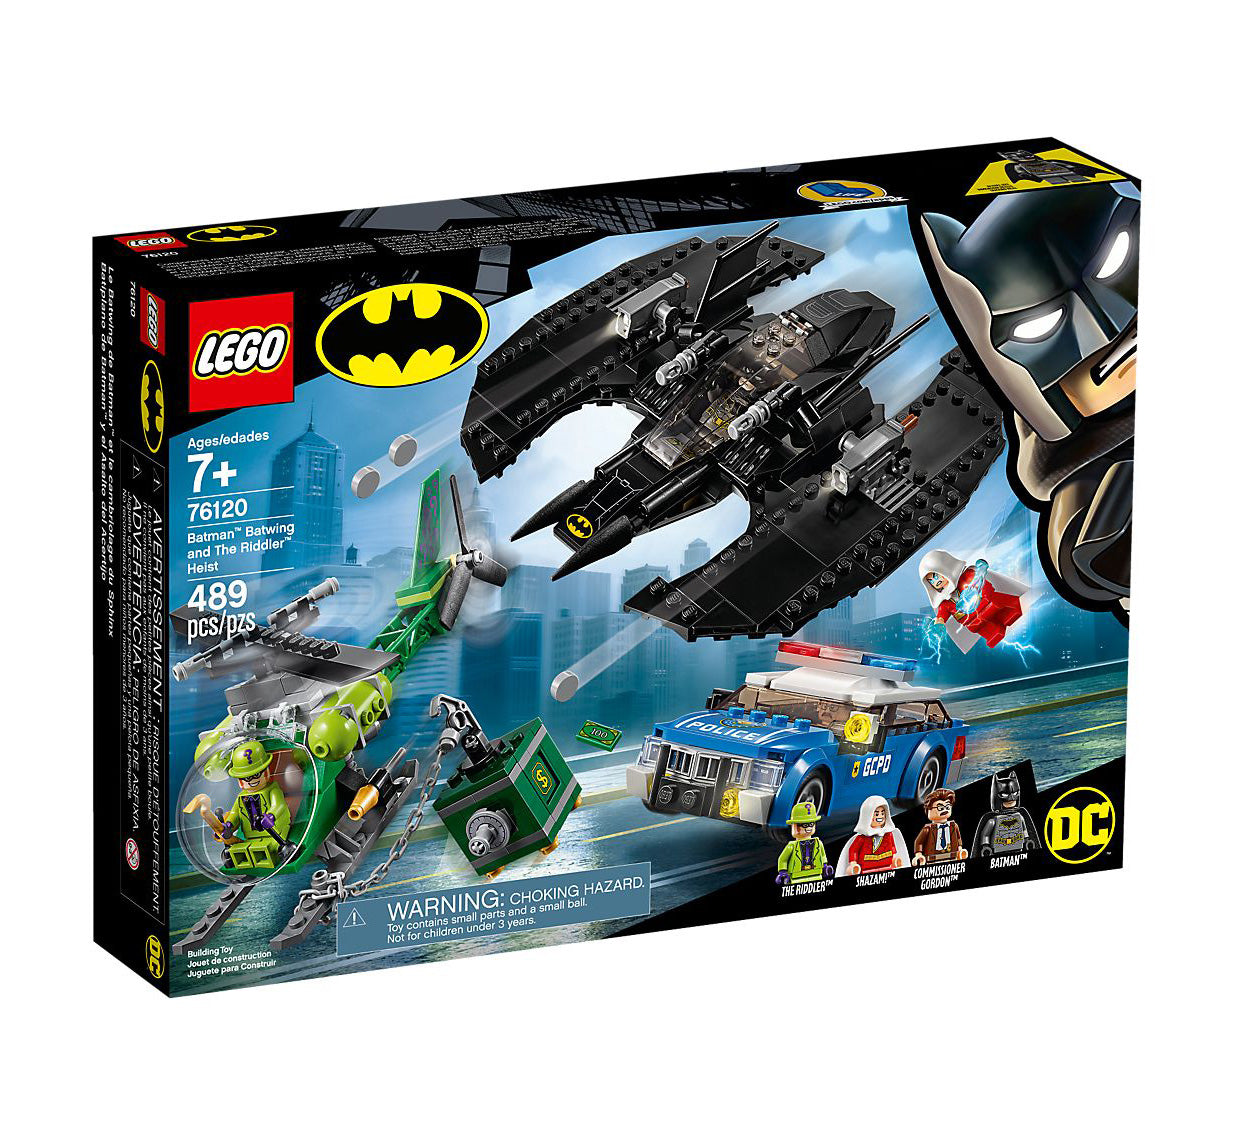 Lego DC Comics Super Heroes Batman Batwing & The Riddler Heist 76120